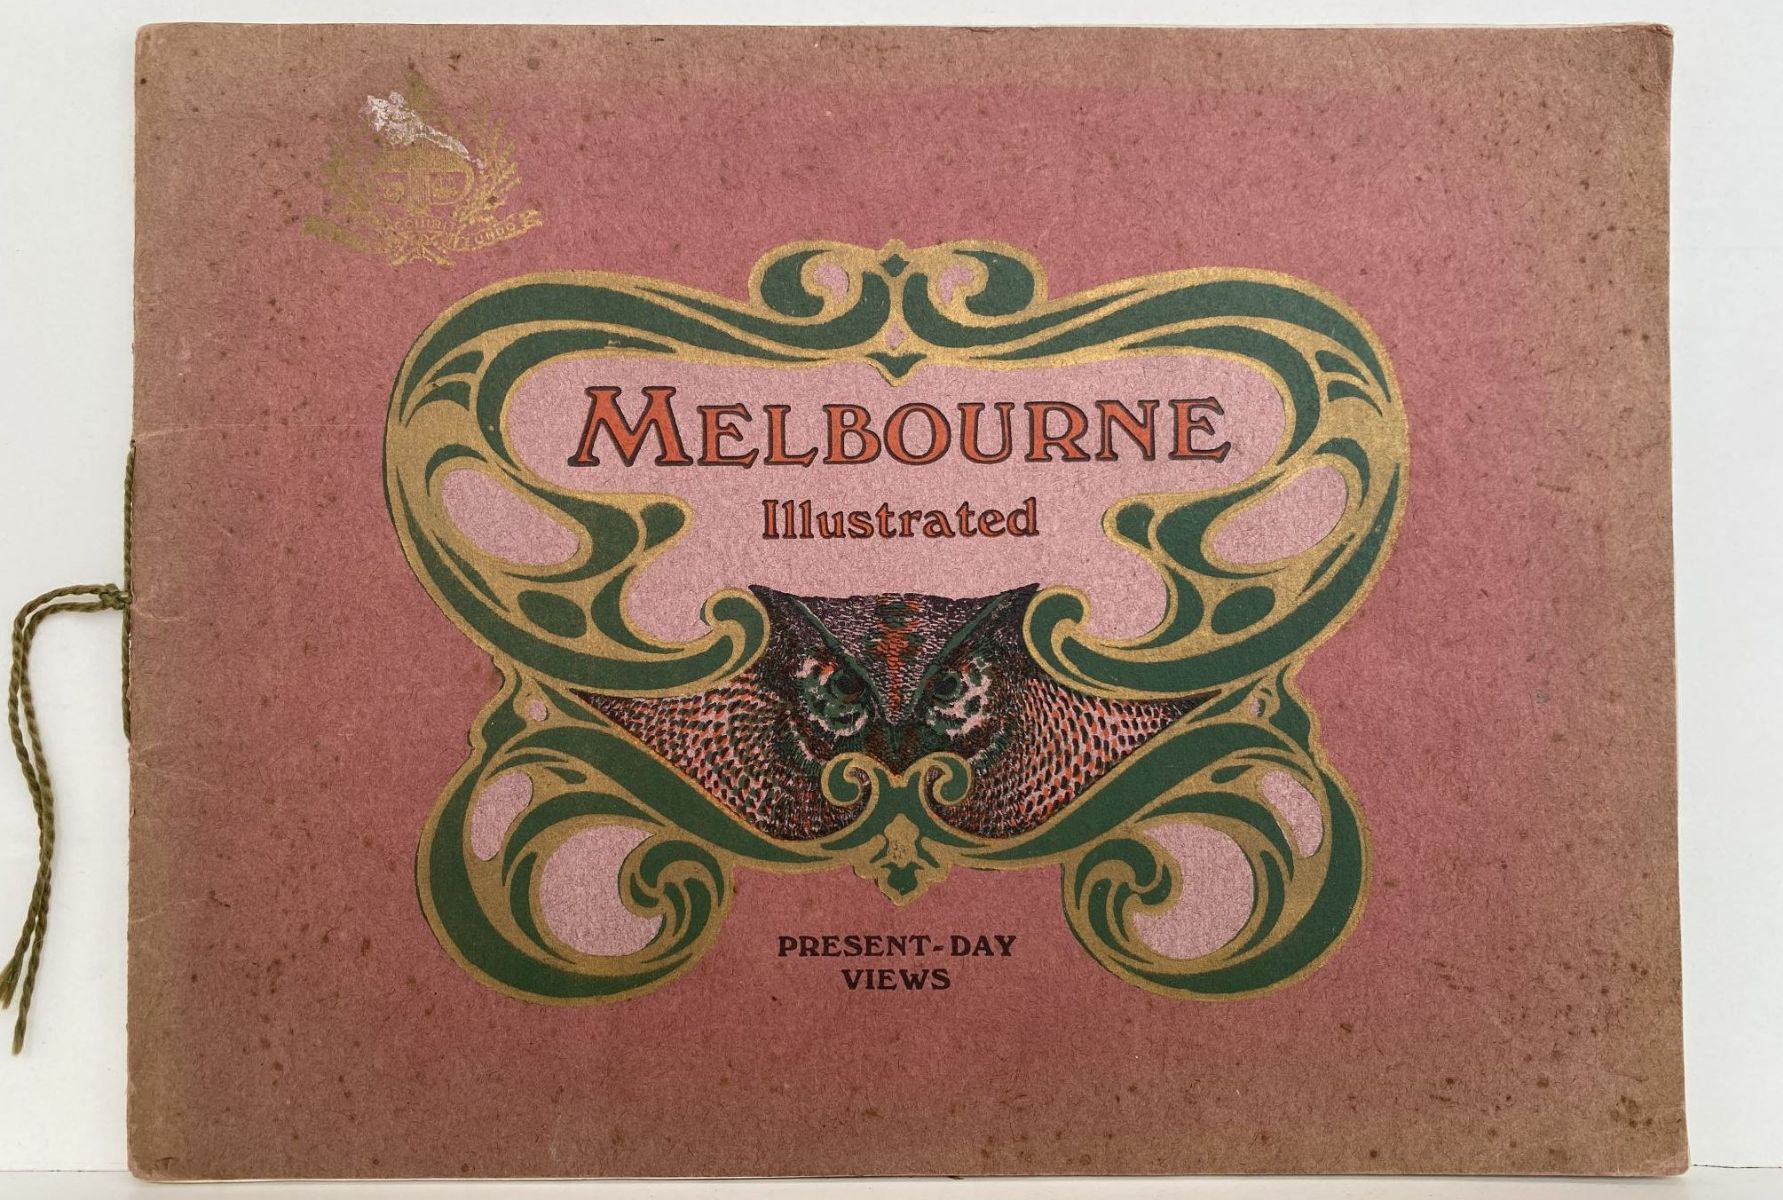 MELBOURNE Illustrated Souvenir - Present Day Views